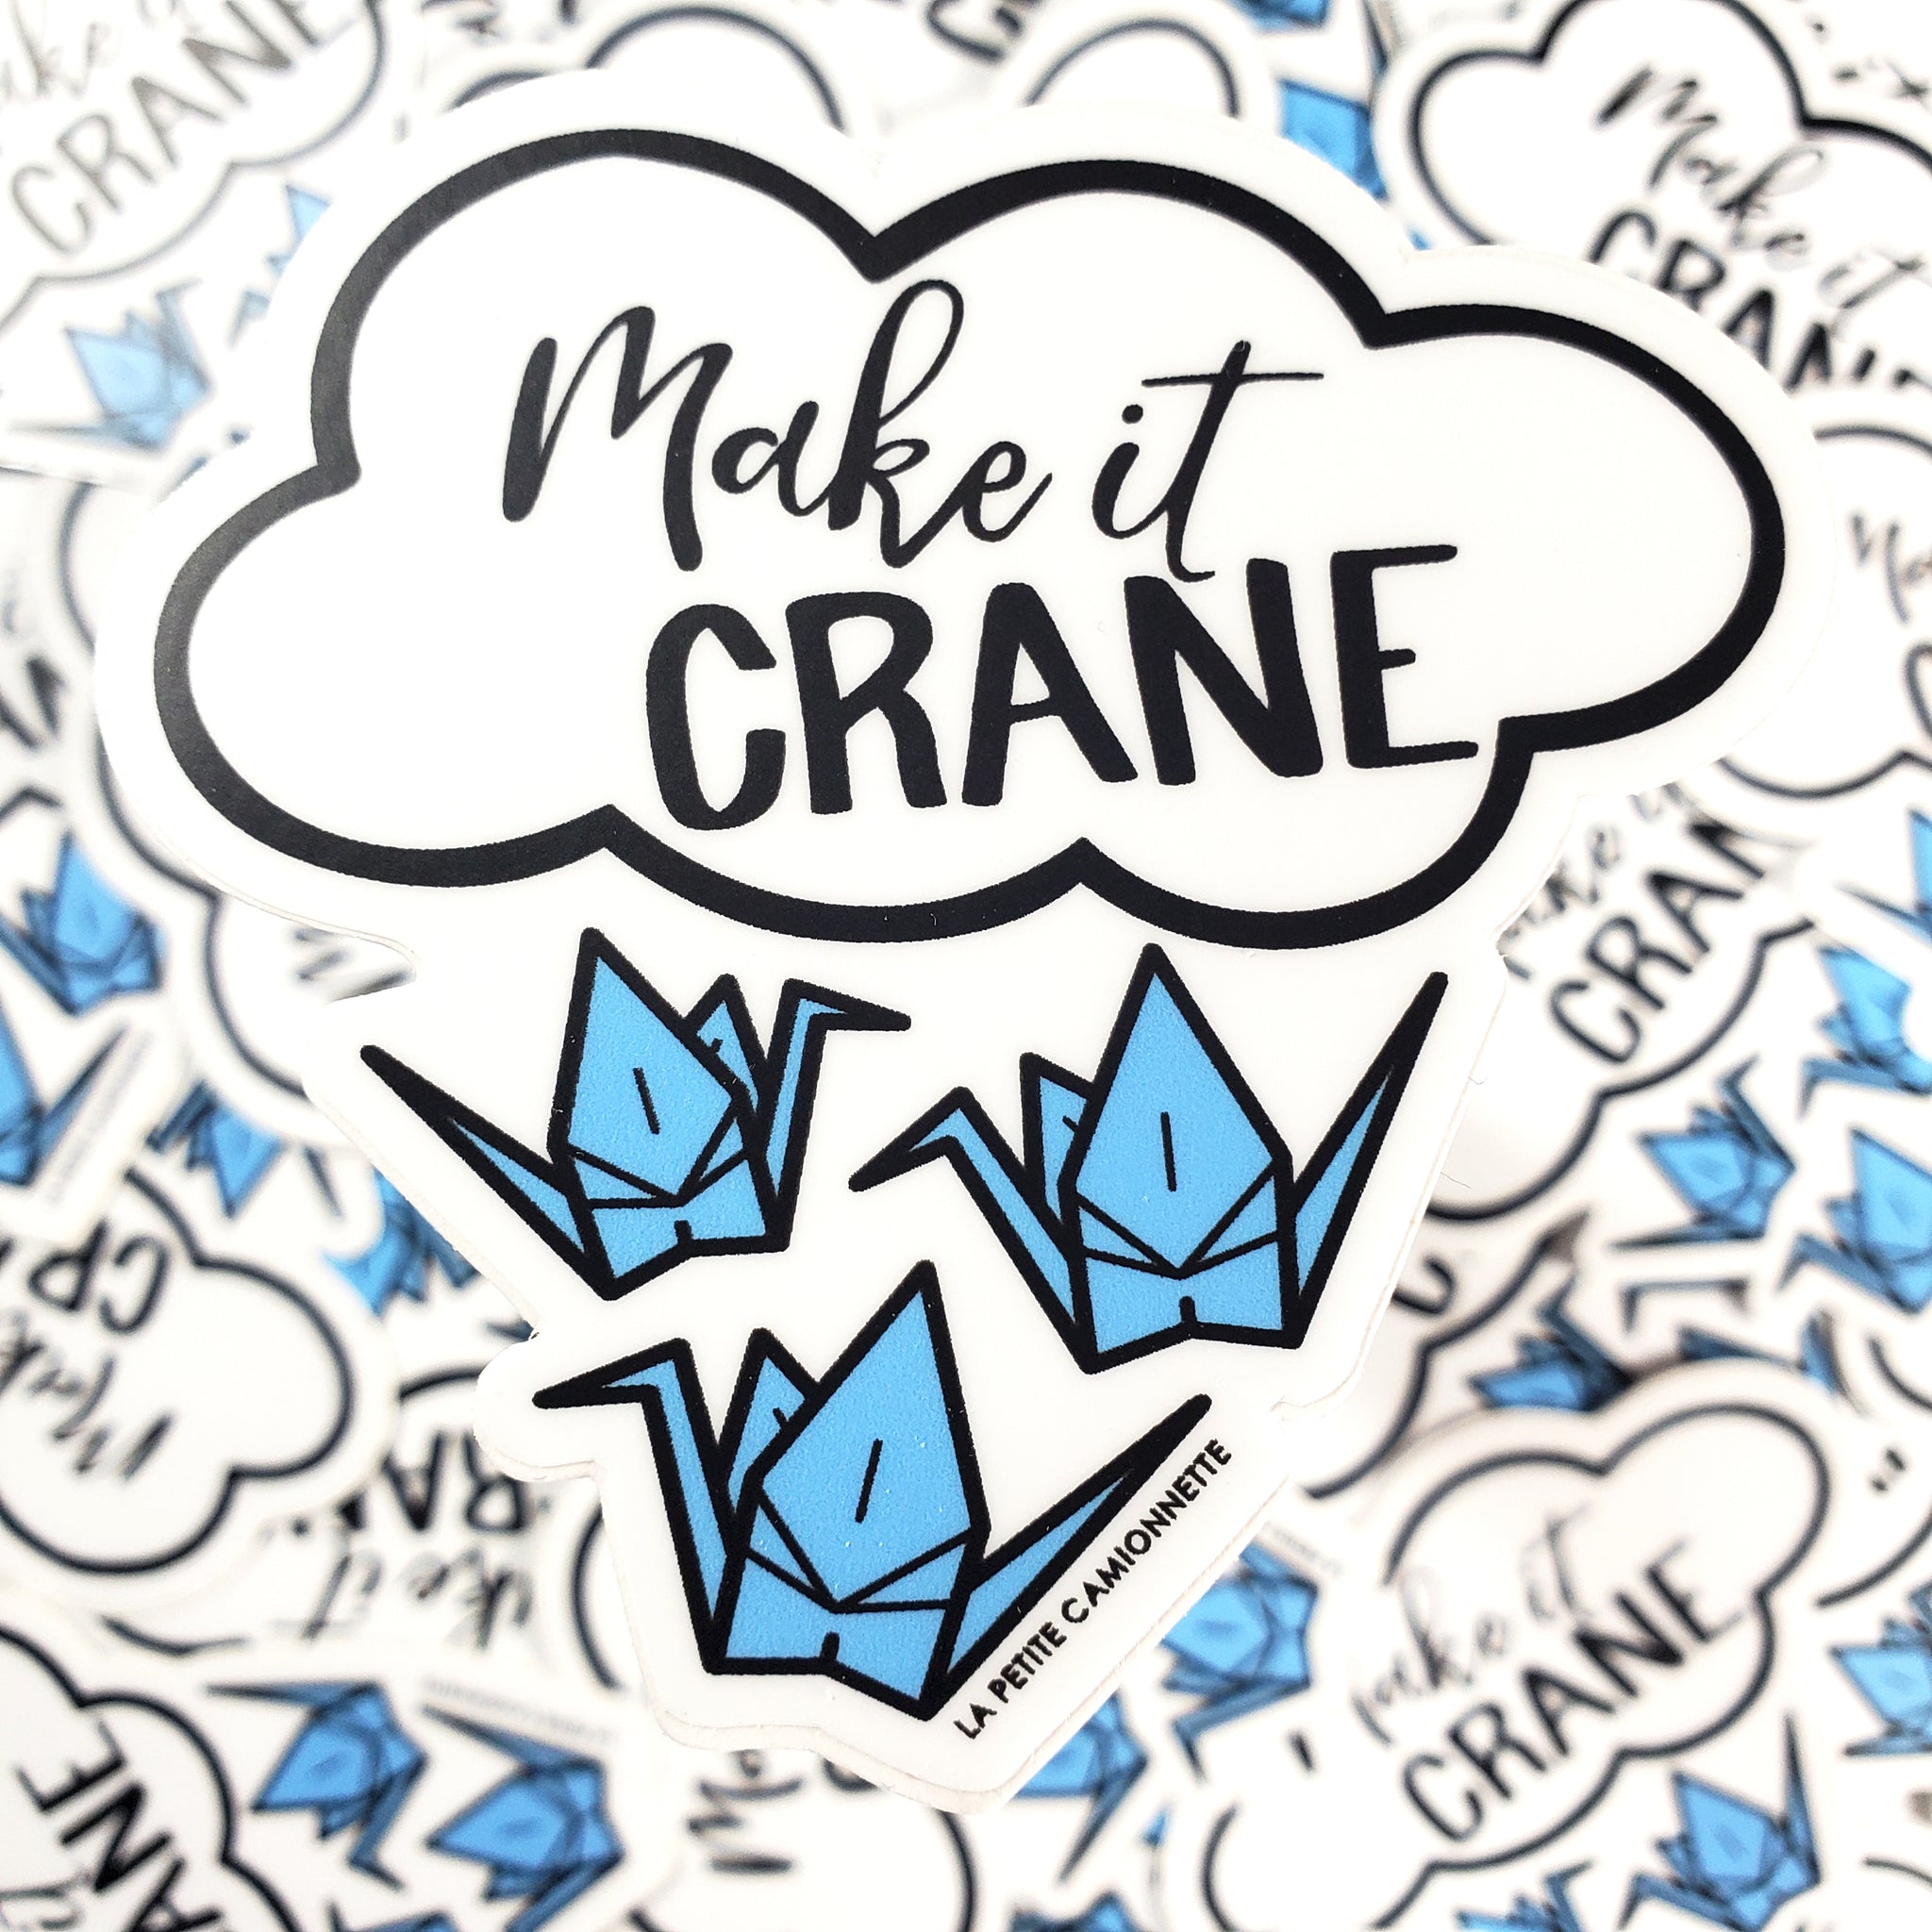 "Make It Crane" Sticker